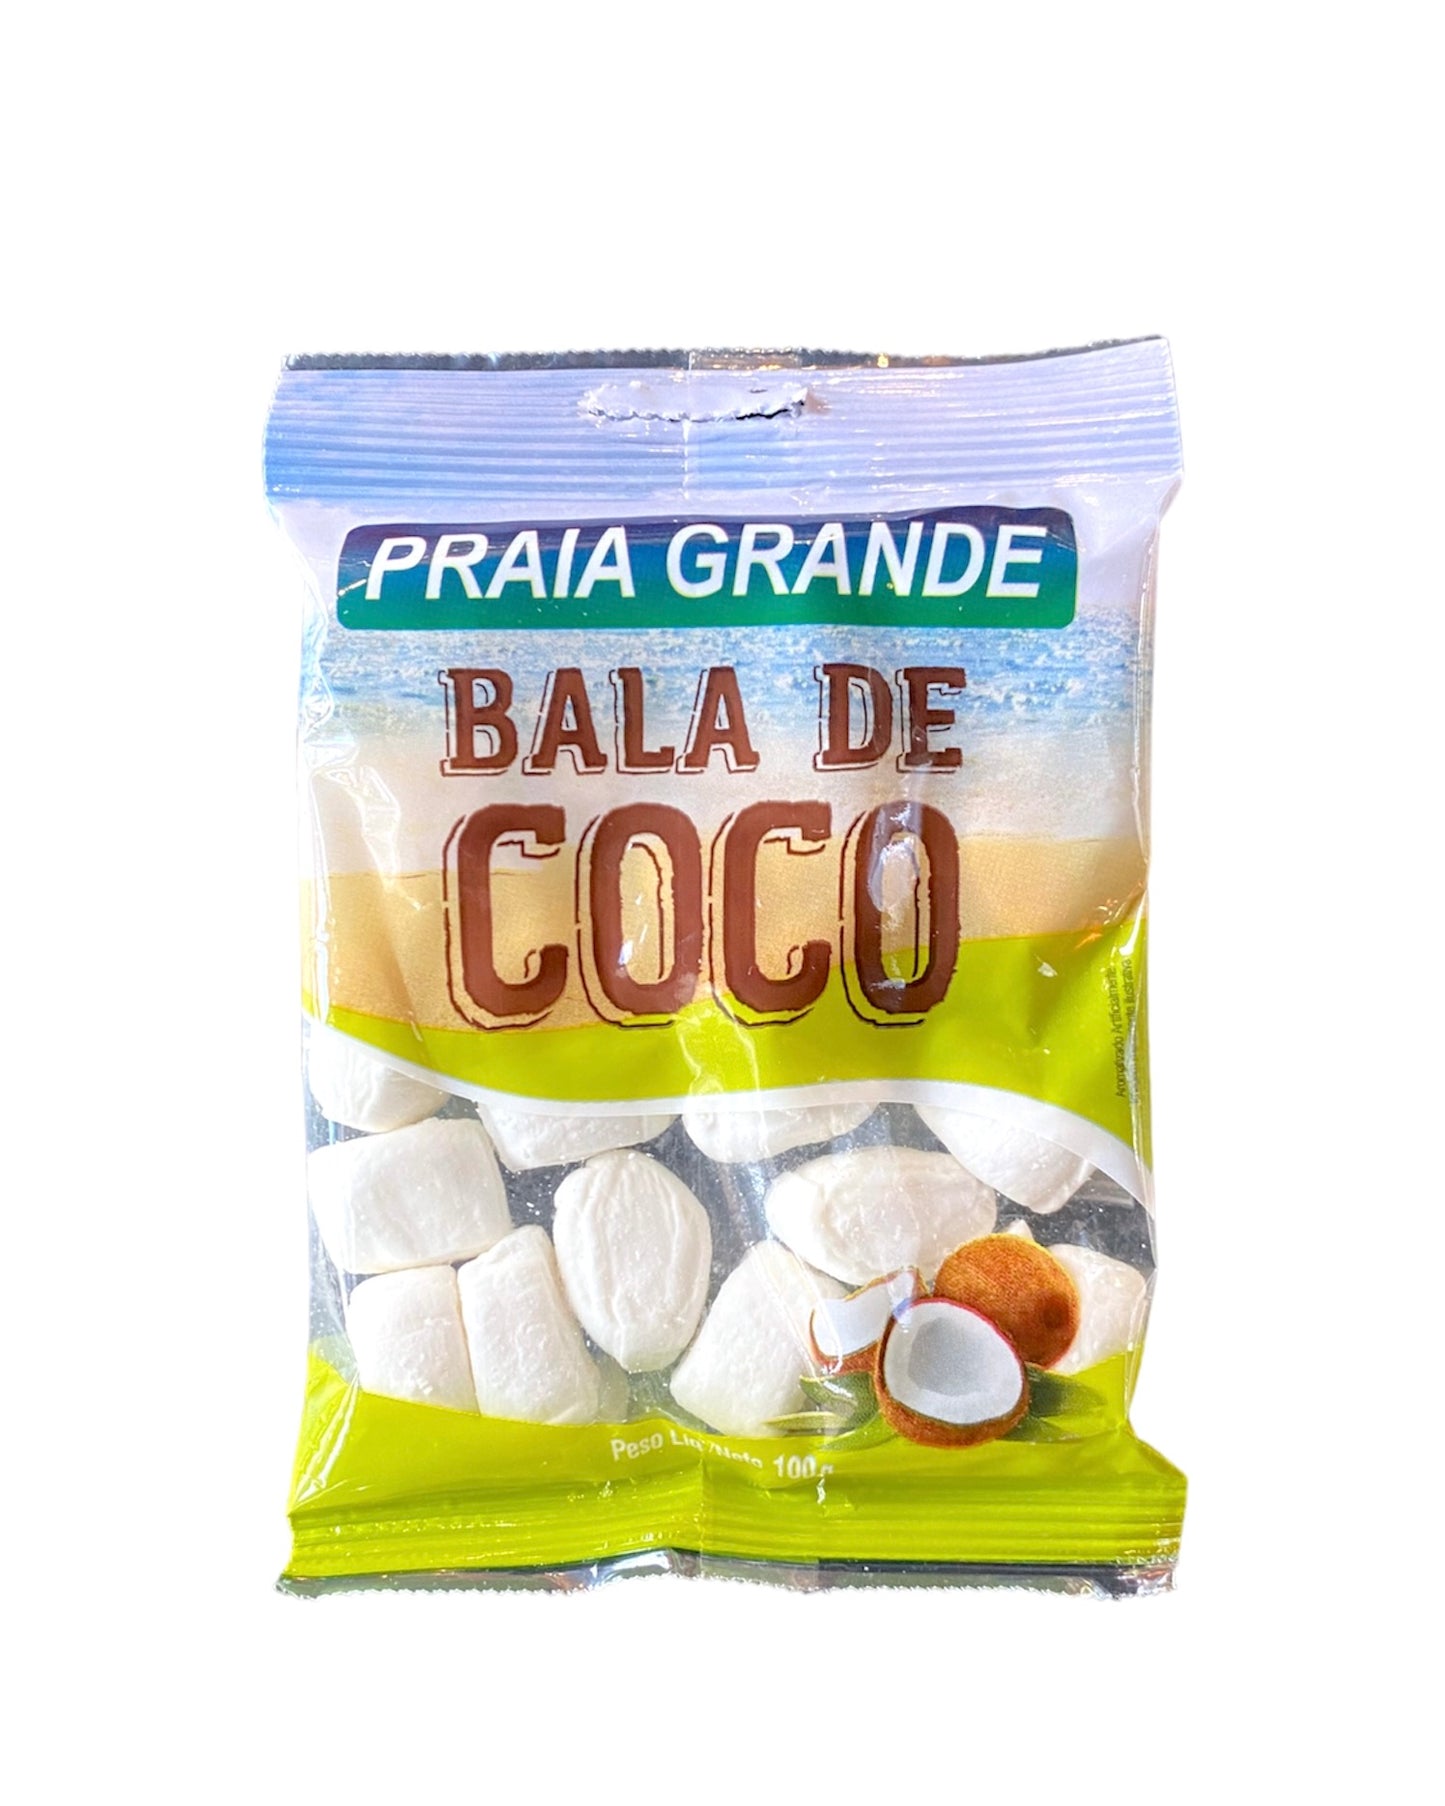 Da Colonia Praia Grande Coconut candy | Bala de Coco praia grande